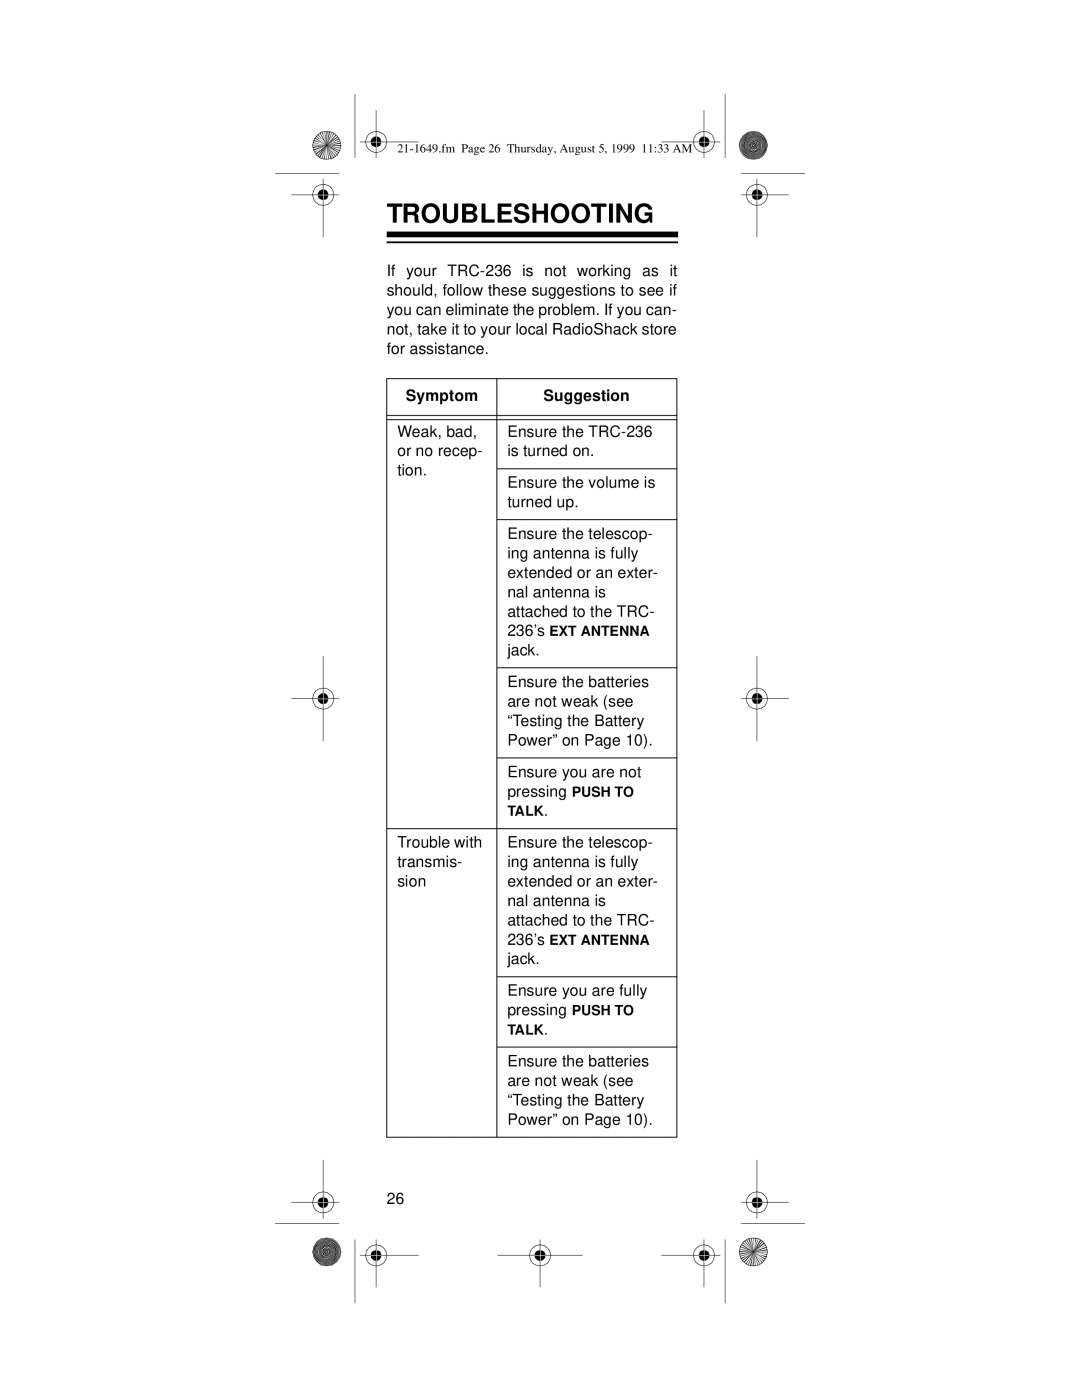 Radio Shack TRC-236 owner manual Troubleshooting, Symptom, Suggestion 